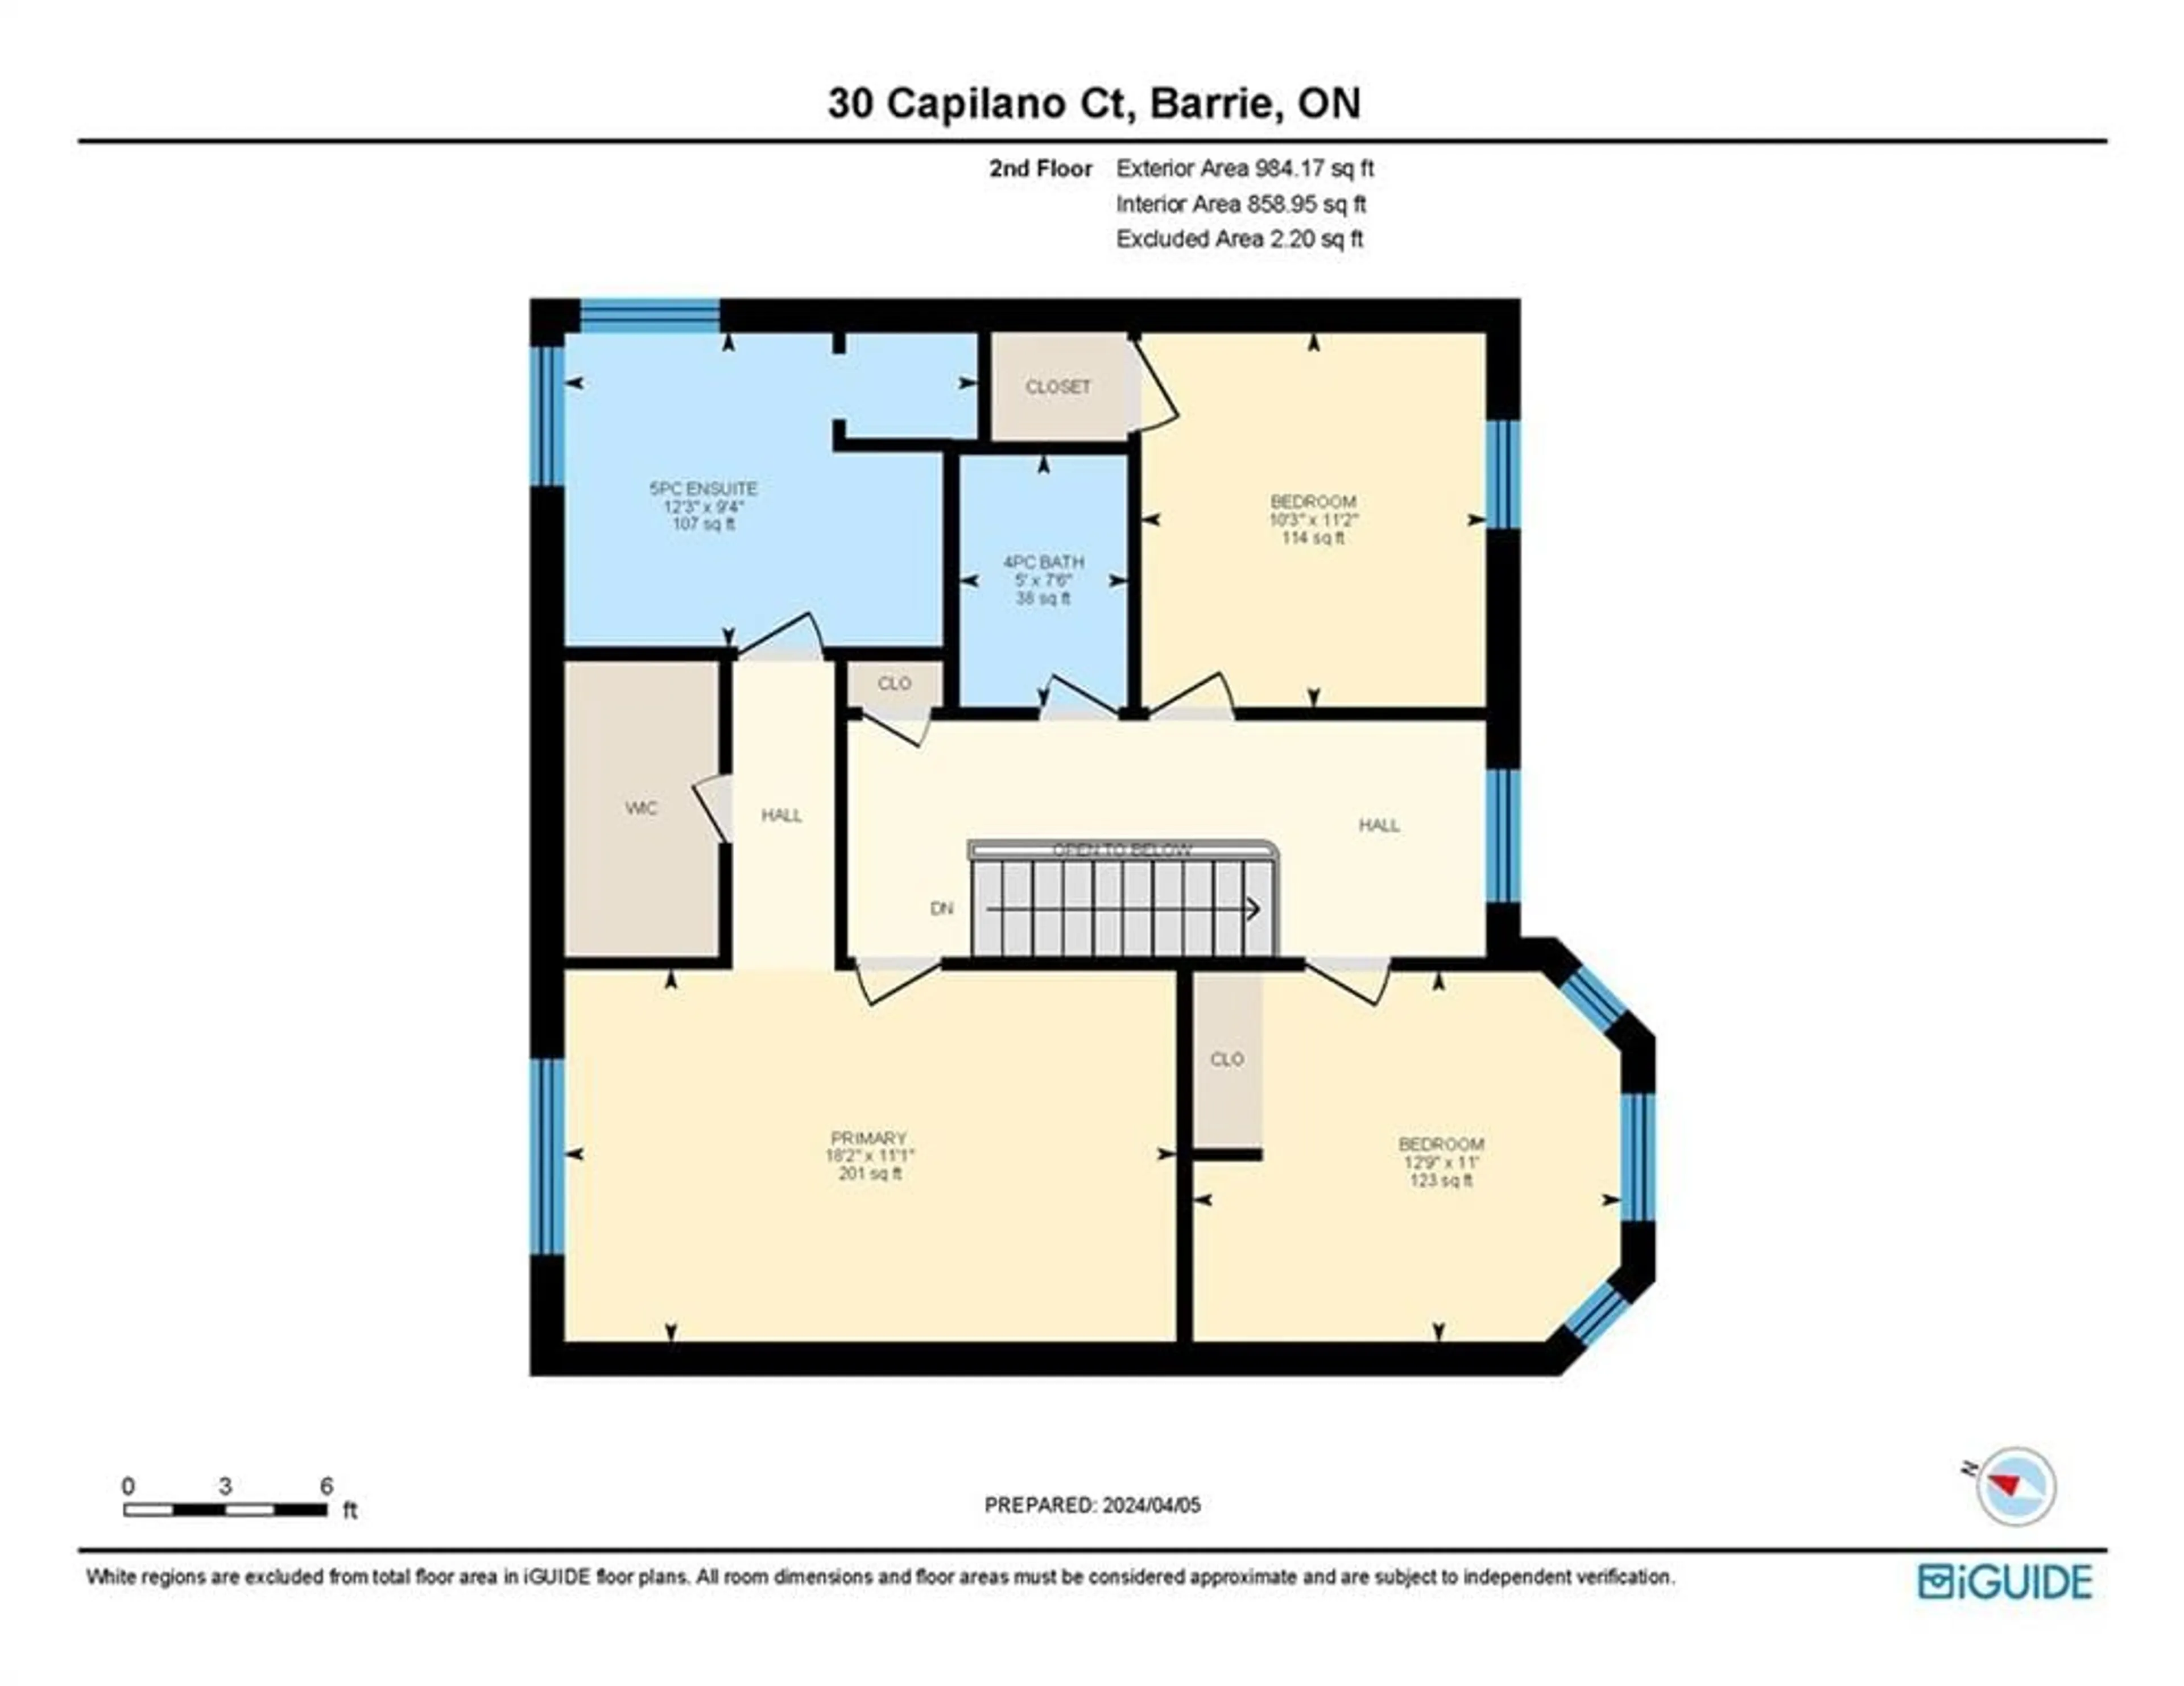 Floor plan for 30 Capilano Crt, Barrie Ontario L4M 7E6